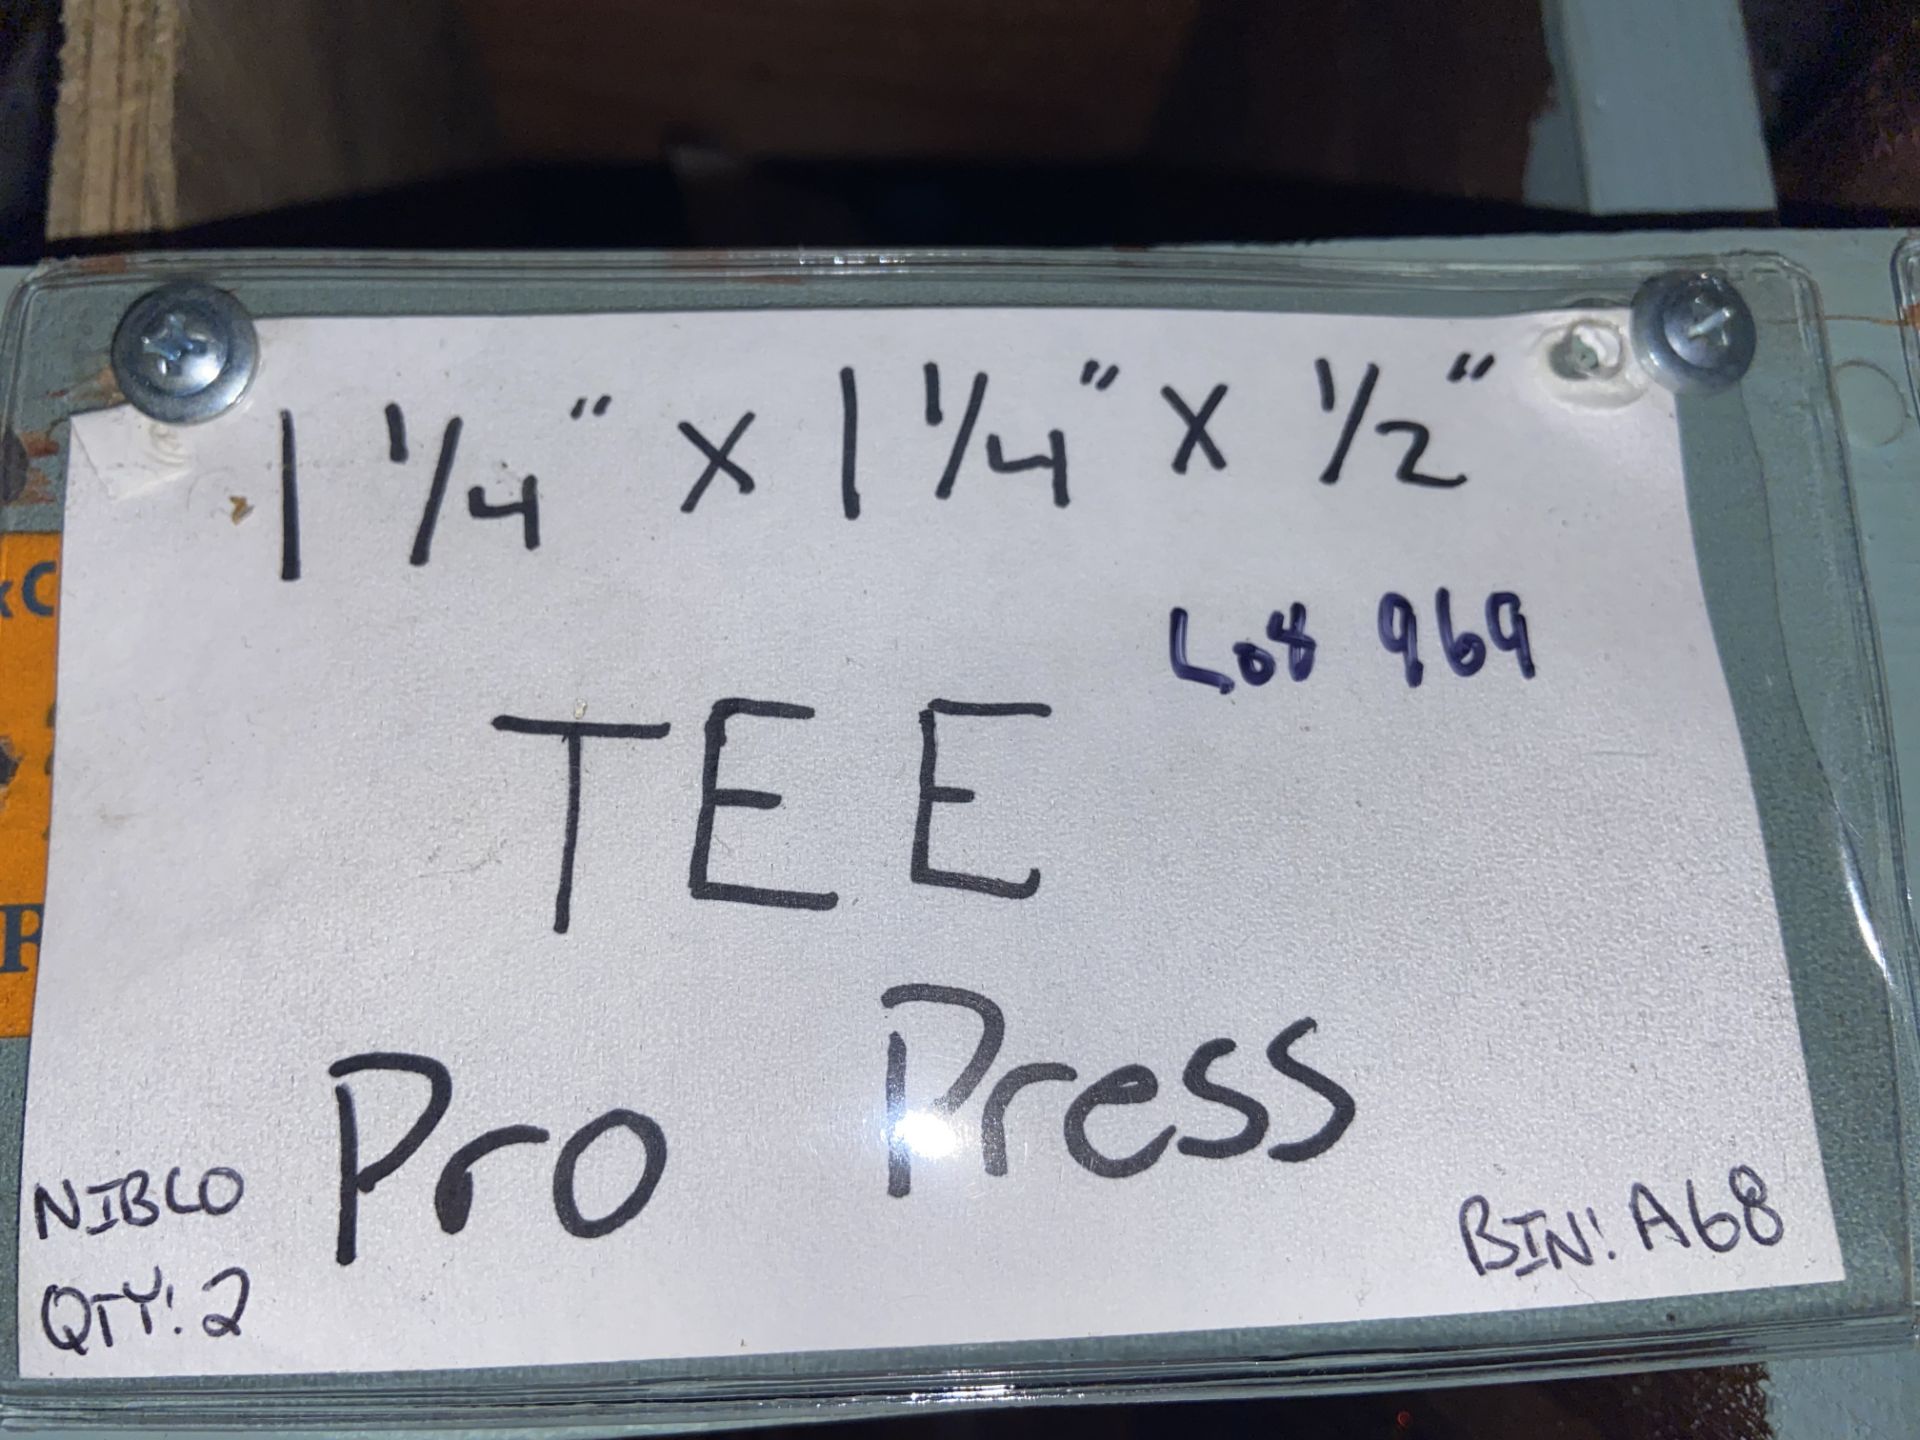 (1) VIEGA 2”x1 1/2” x 1 1/4” Tee Pro Press; (2) NIBCO 1 1/4” 1 1/4”x 1/2” Tee Pro Press; VIEGA (1) - Image 33 of 33